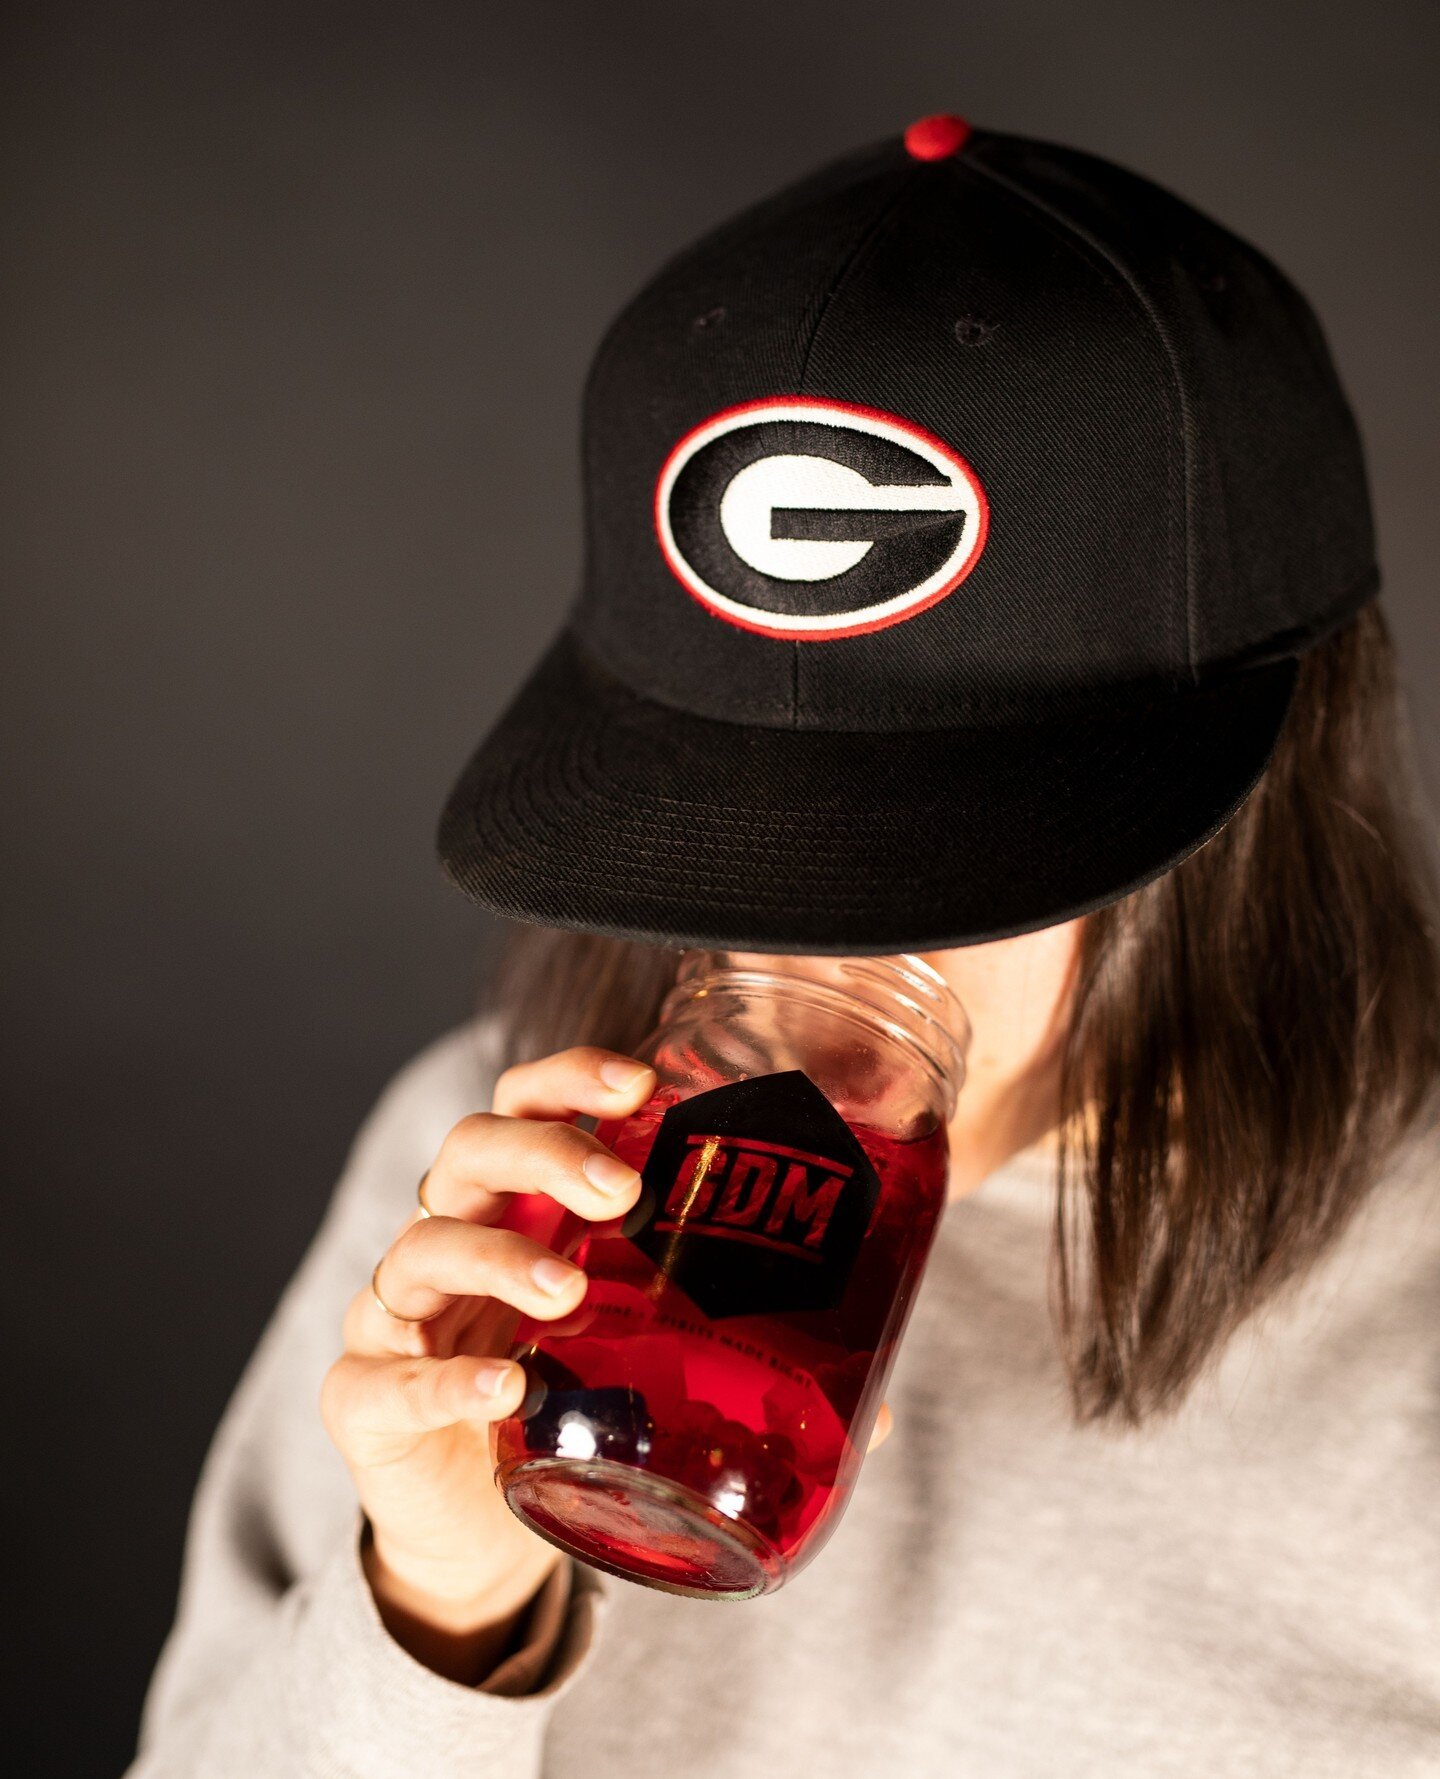 The champs start drinkin' early 🥃 Tastes like victory already. ⁠
#GoDawgs